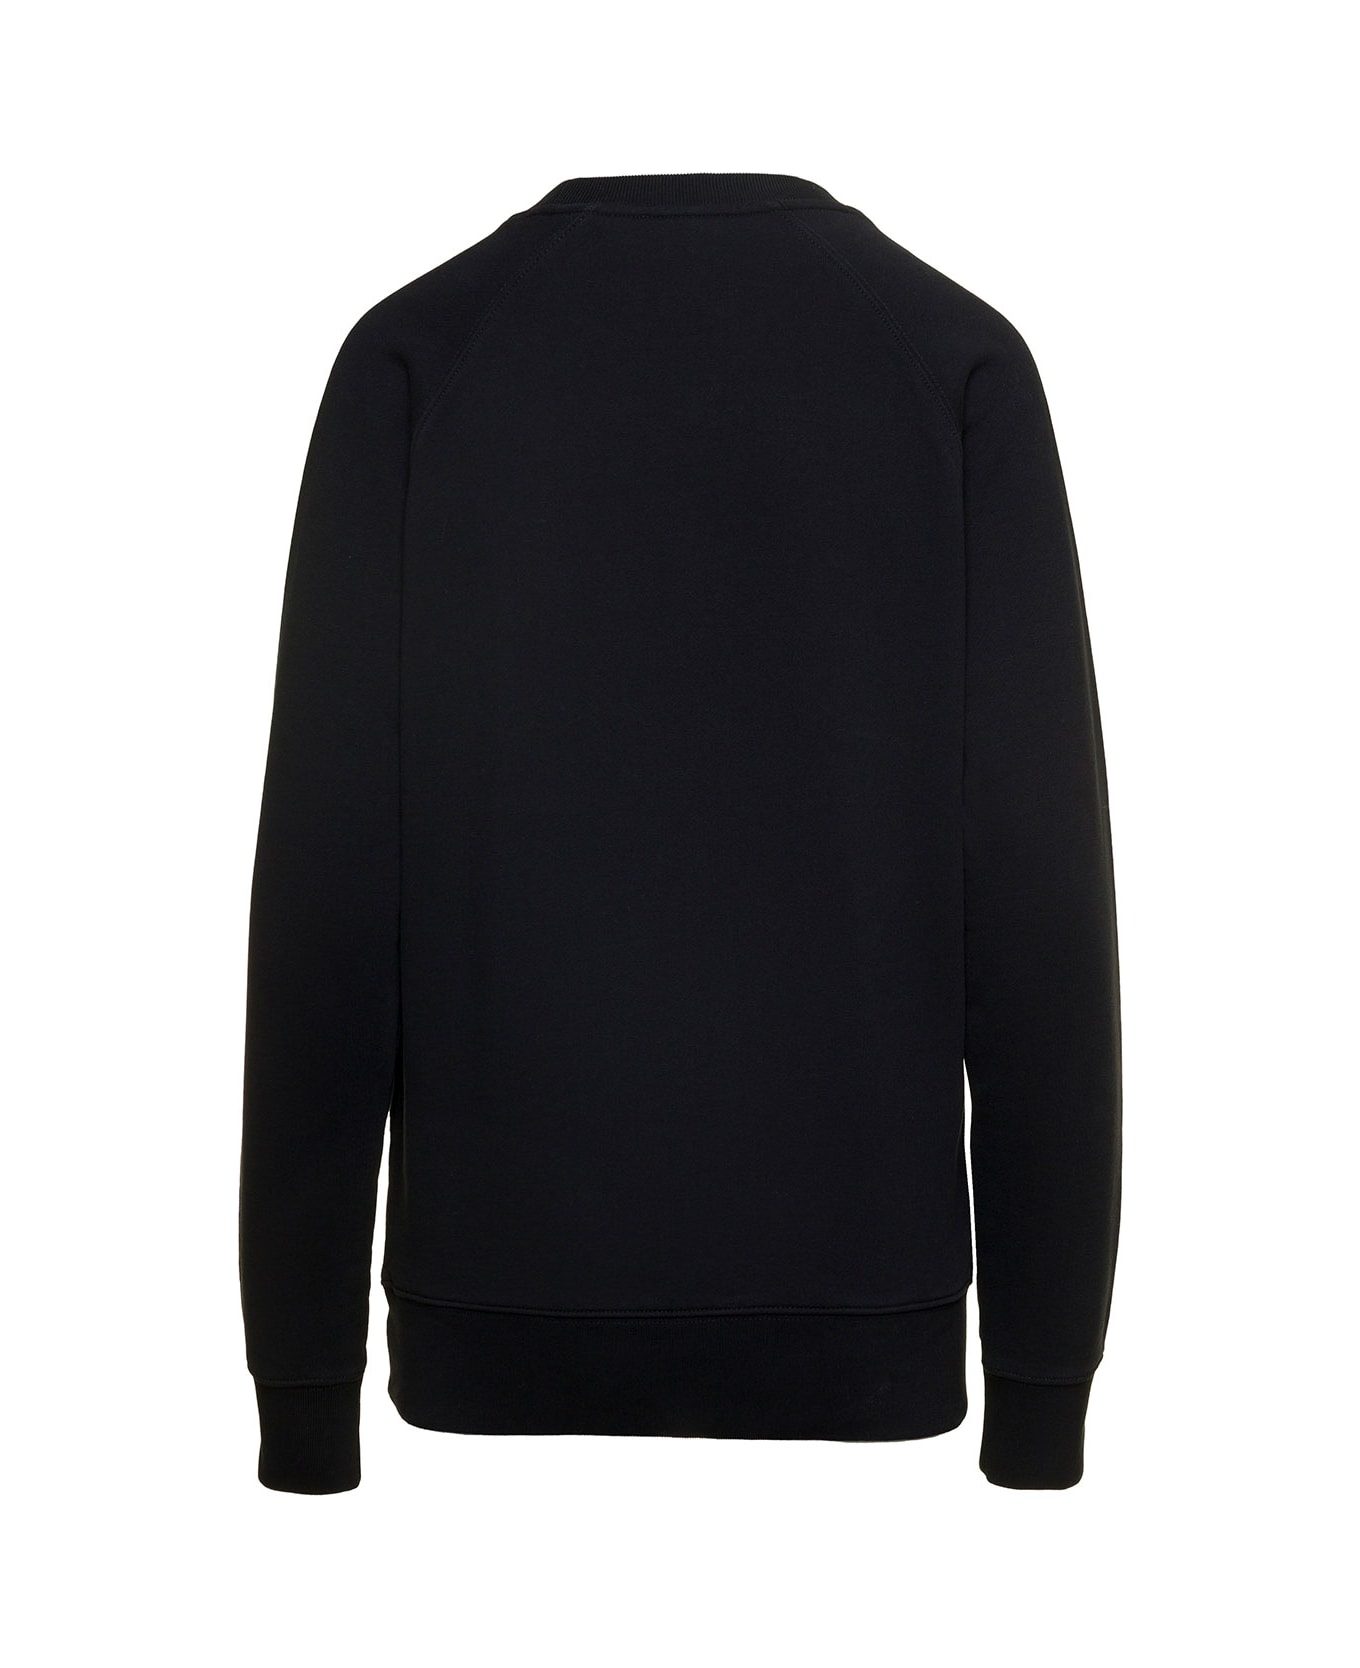 Maison Kitsuné Palais Royal Crewneck Sweatshirt With Logo In Black Cotton Woman - Black